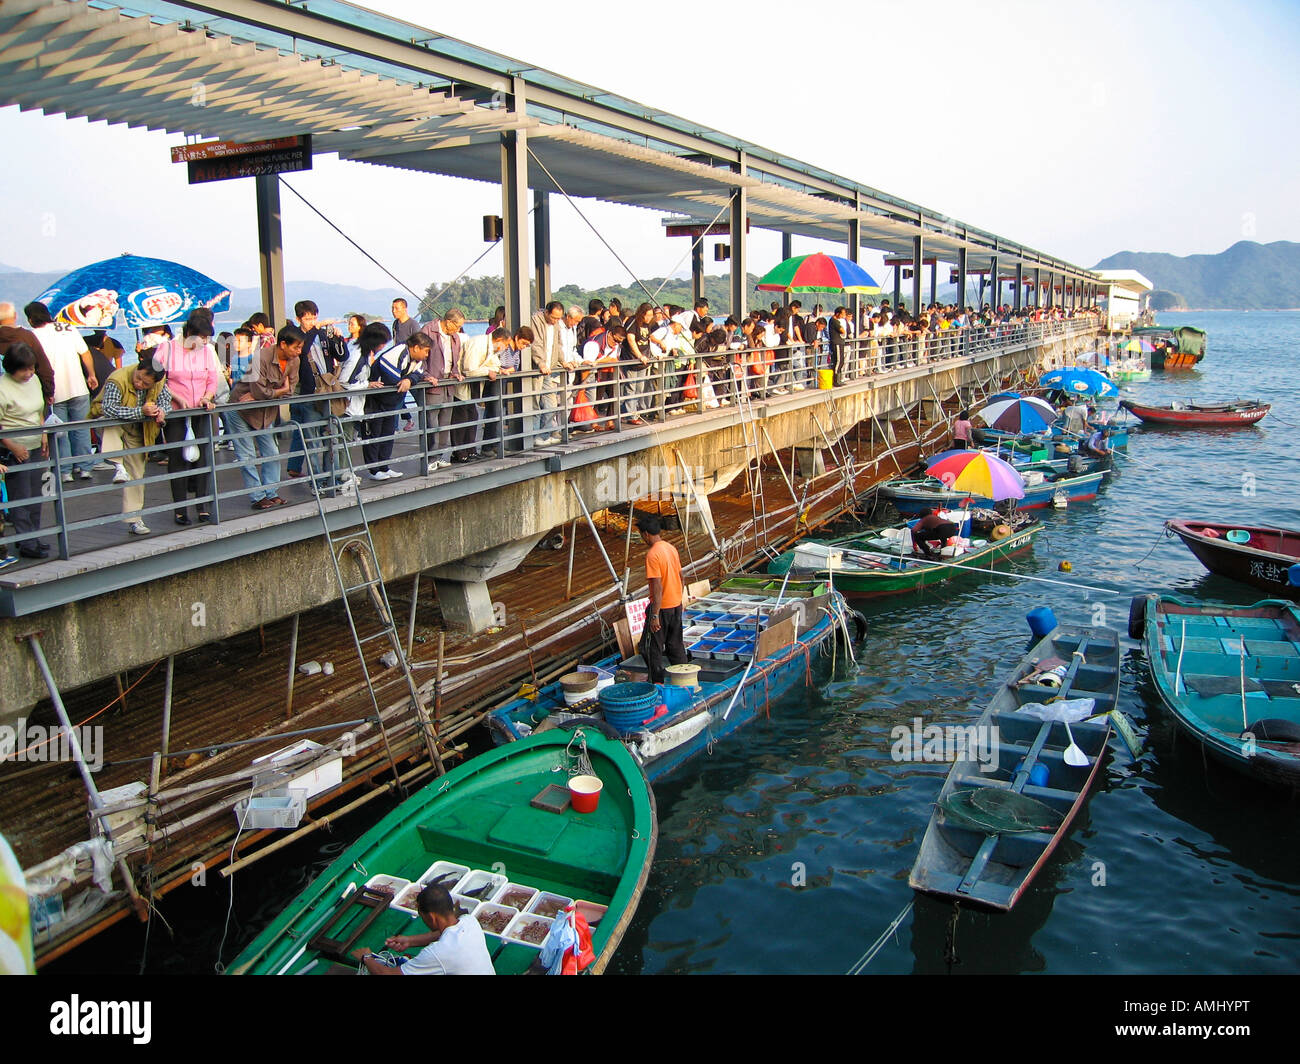 Vendors Selling Live Seafood from Boats at the Pier Sai Kung Hong Kong Stock Photo